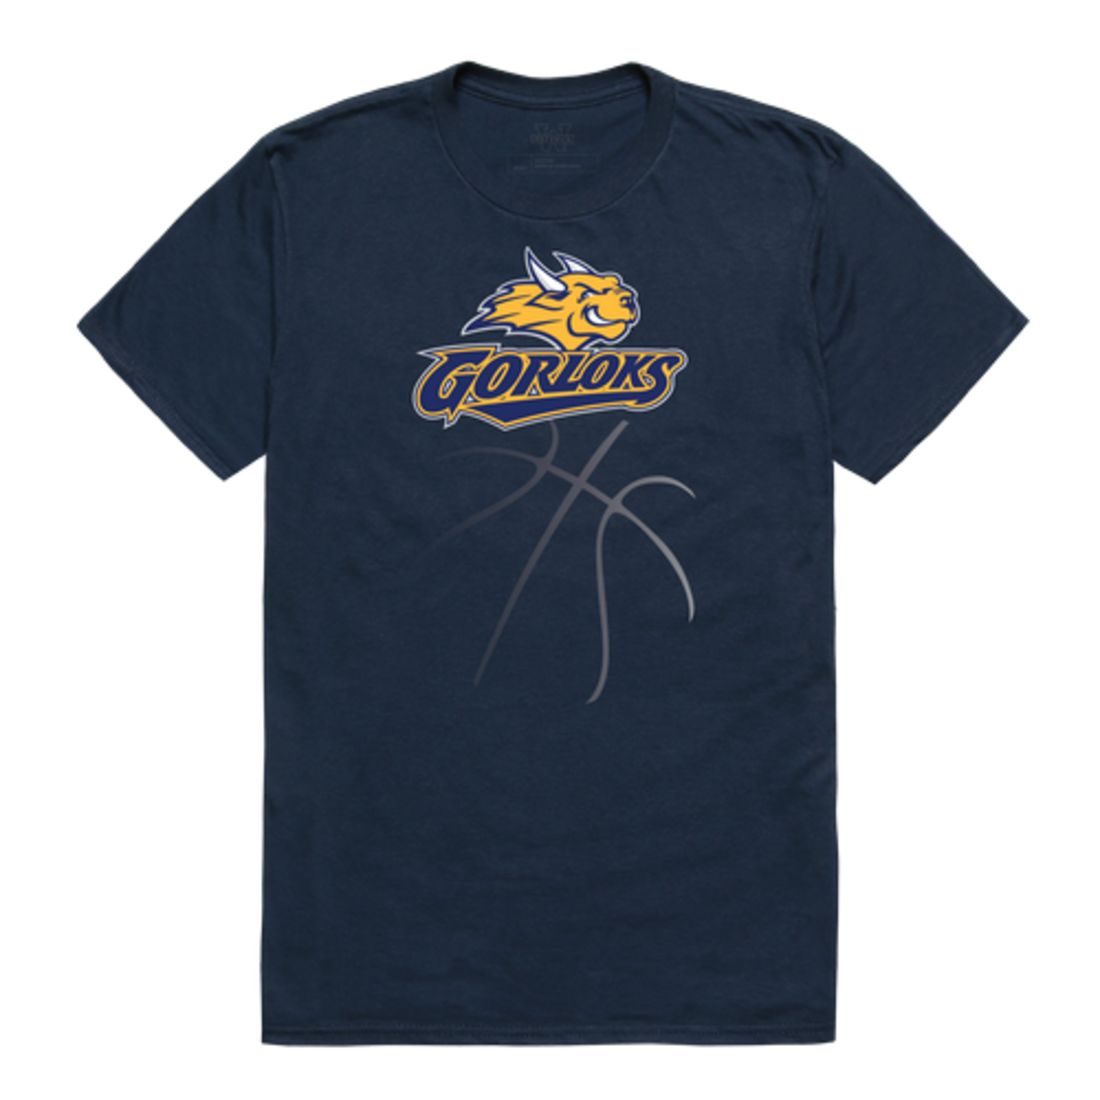 Webster University Gorlocks Basketball T-Shirt Tee